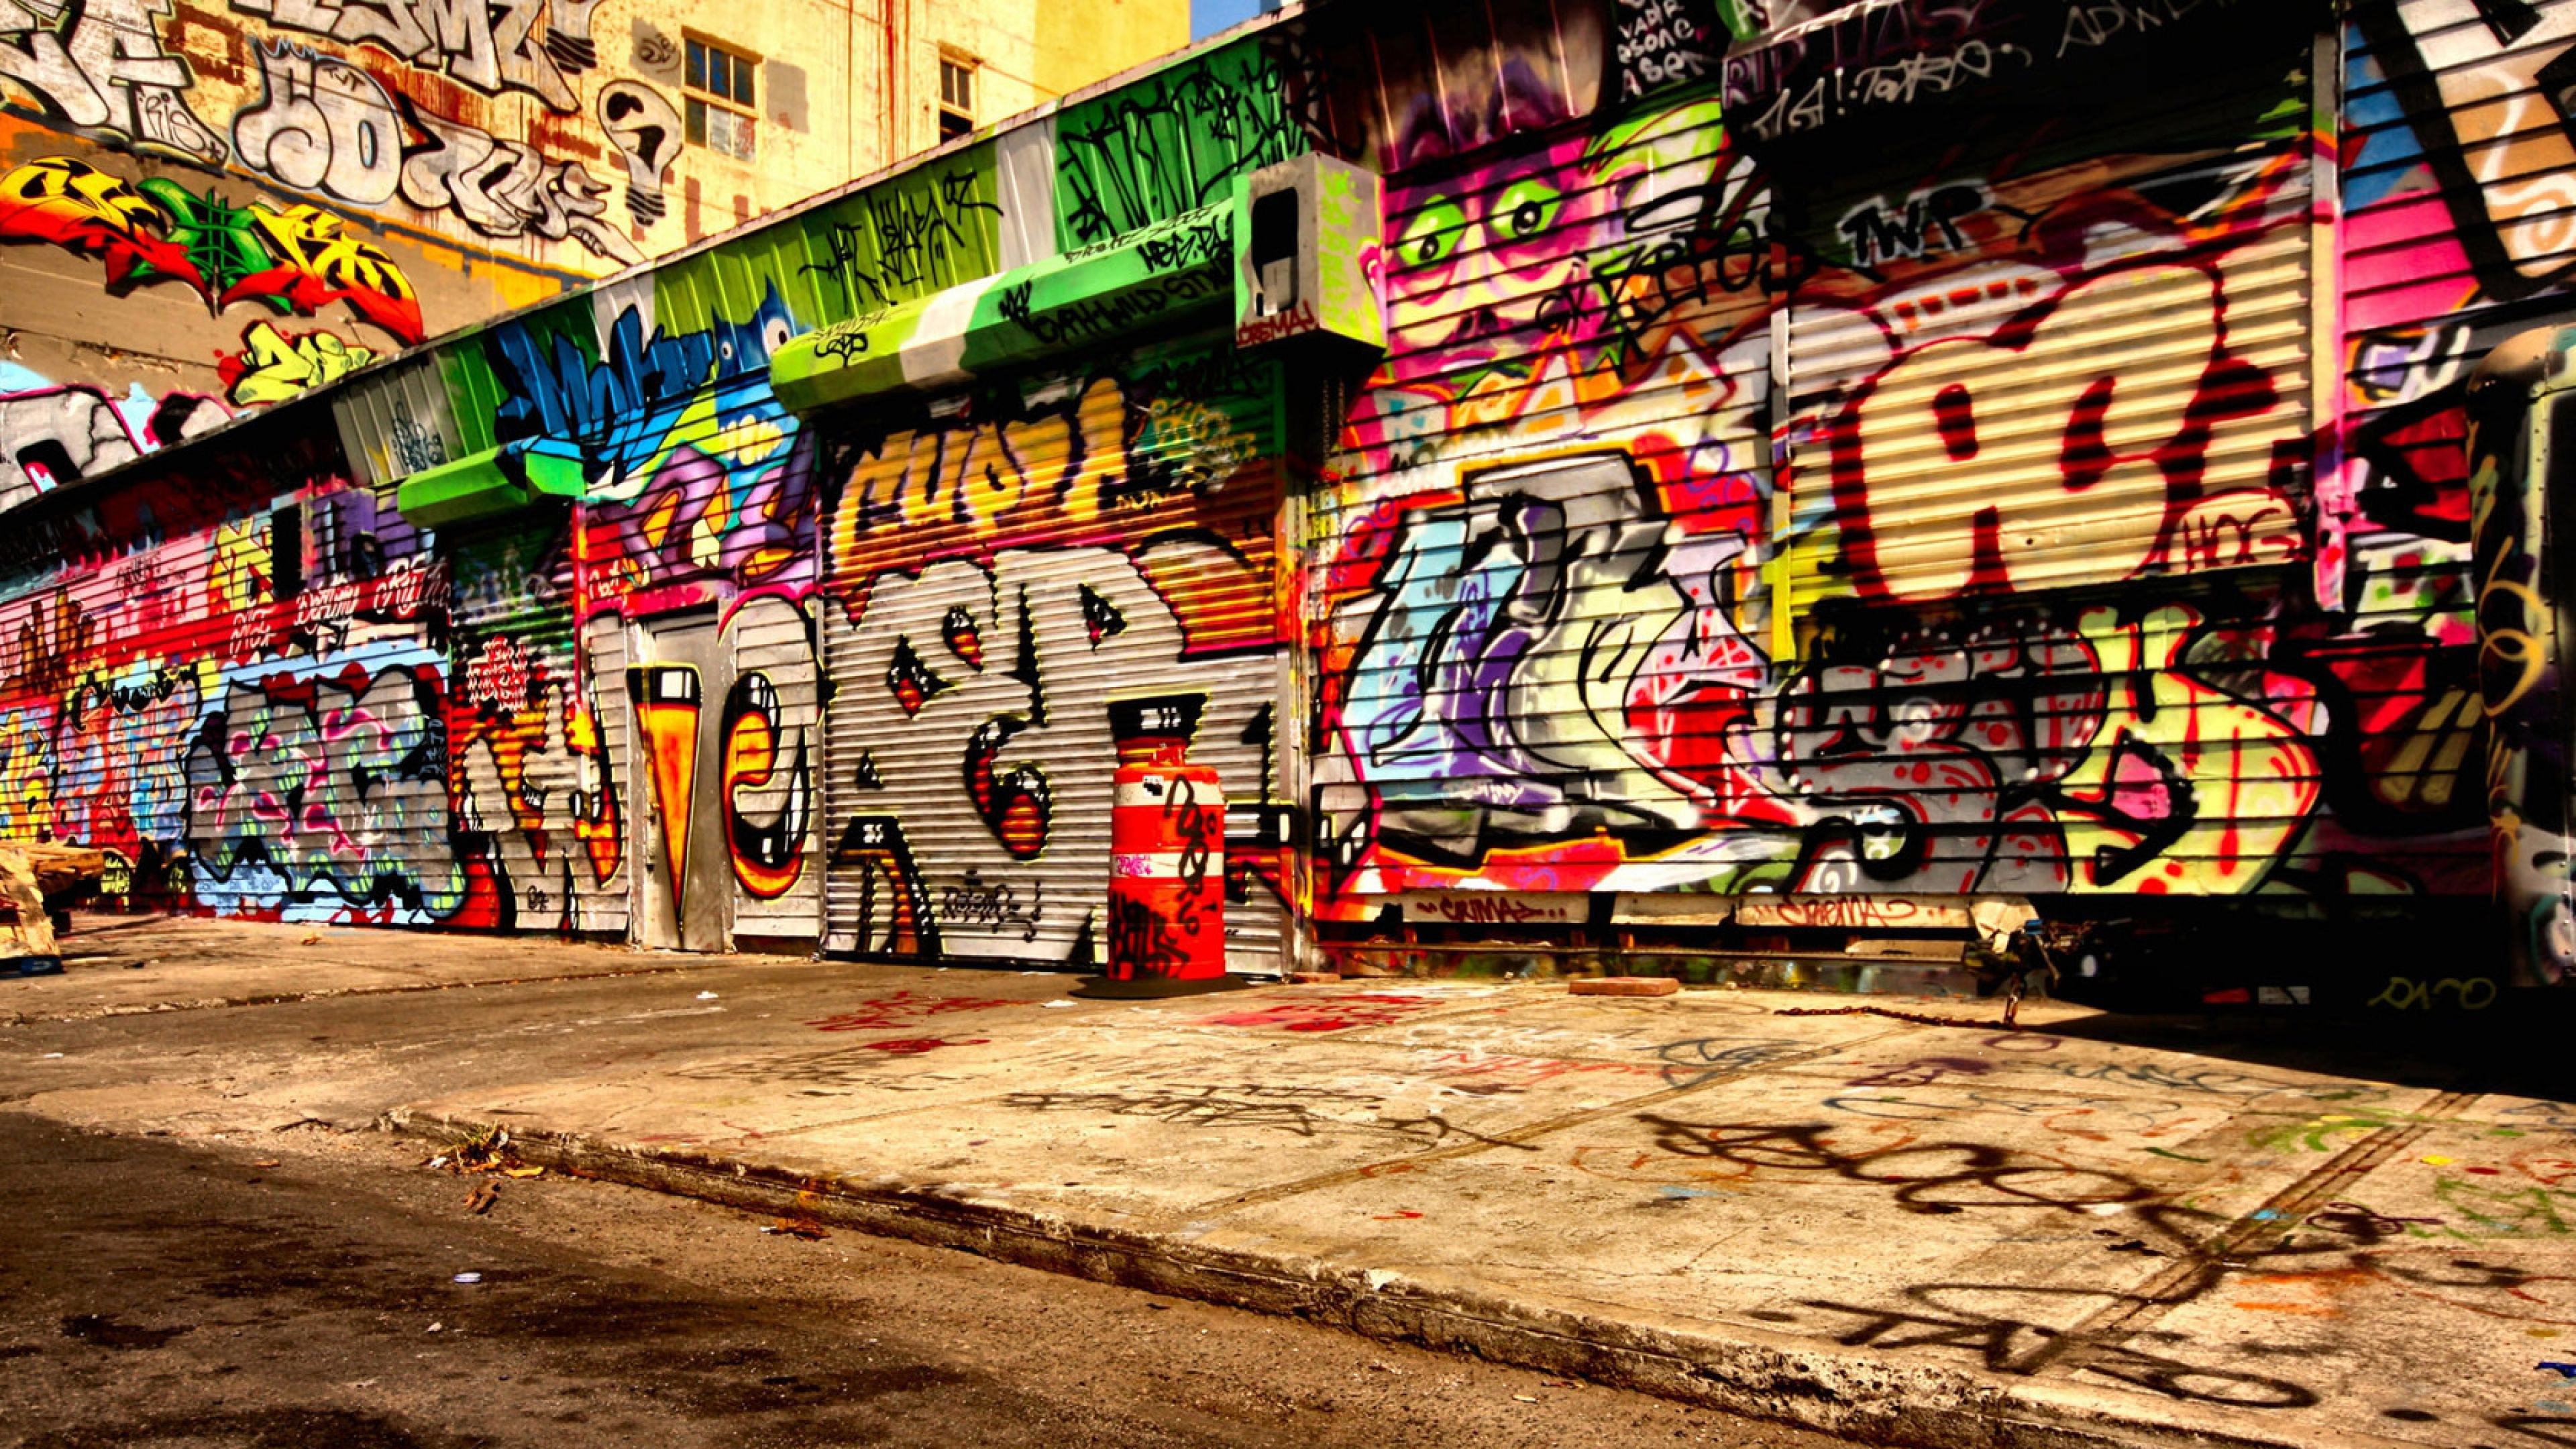 Wallpaper graffiti skull colorful street art desktop wallpaper hd  image picture background 8faa4e  wallpapersmug